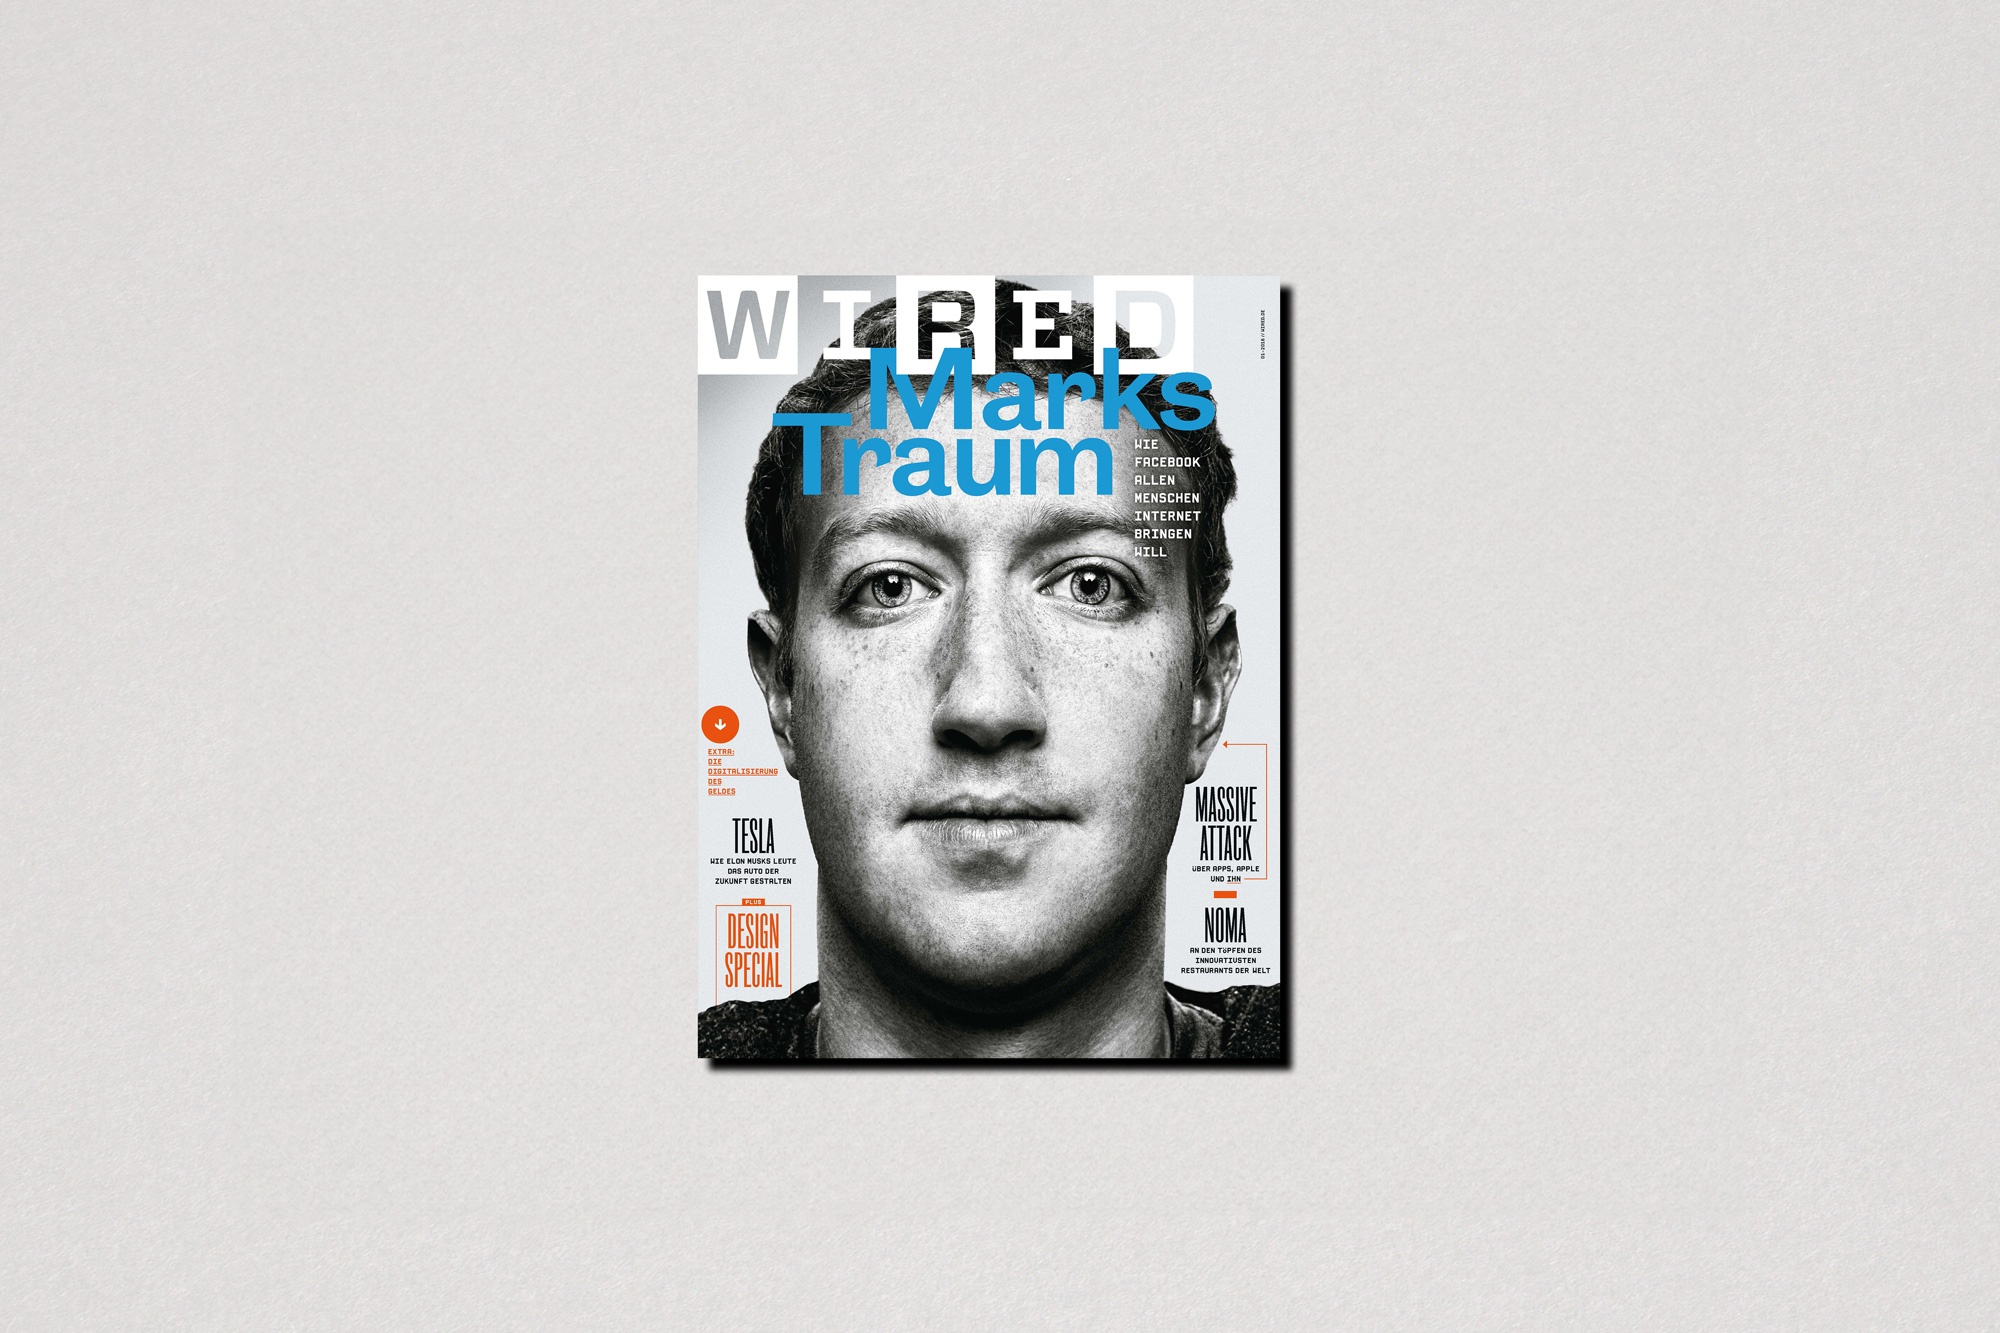 Wired magazine technology cover by Platon Mar Zuckerberg facebook